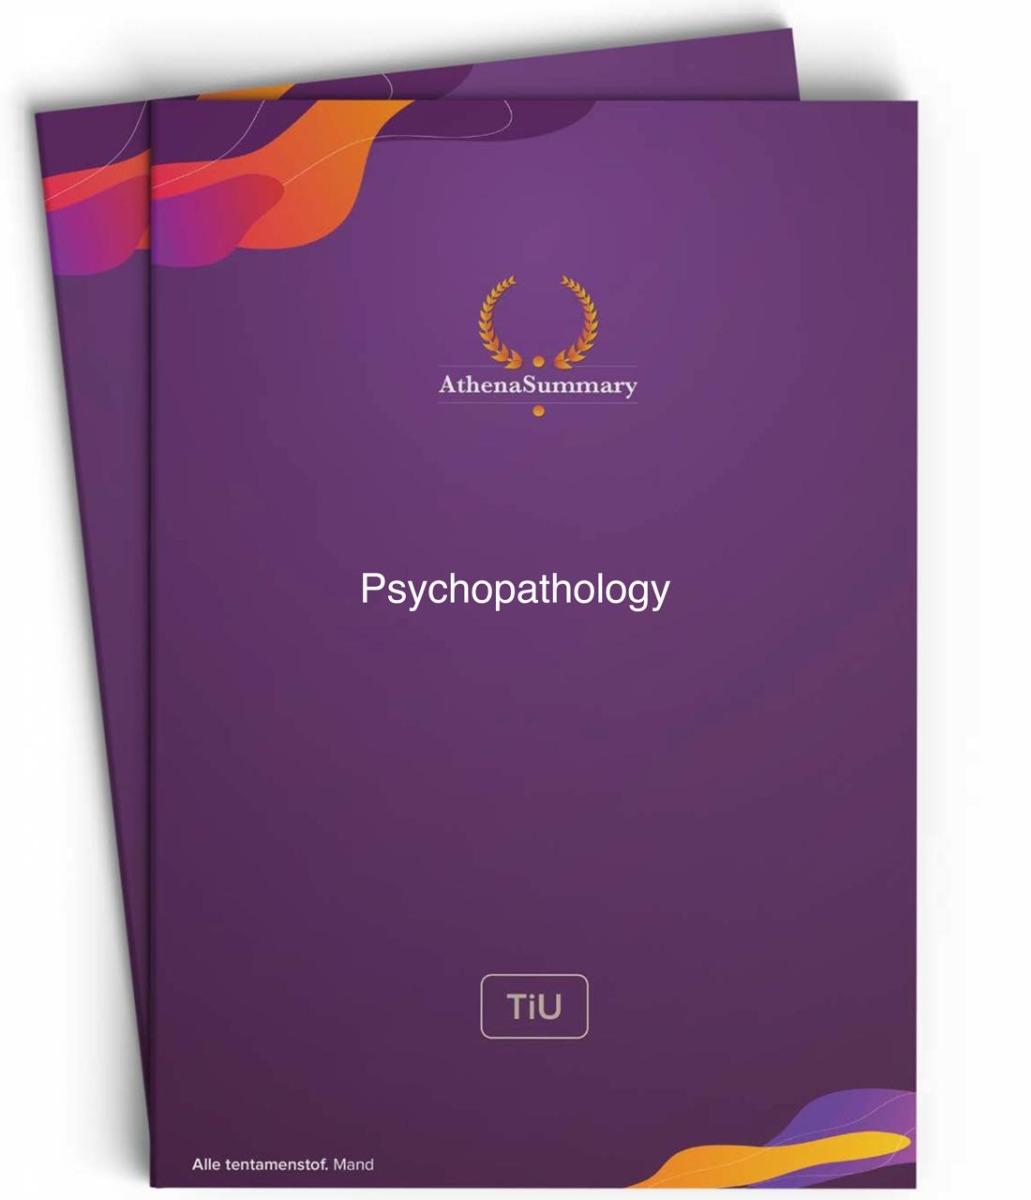 Literature Summary: Psychopathology